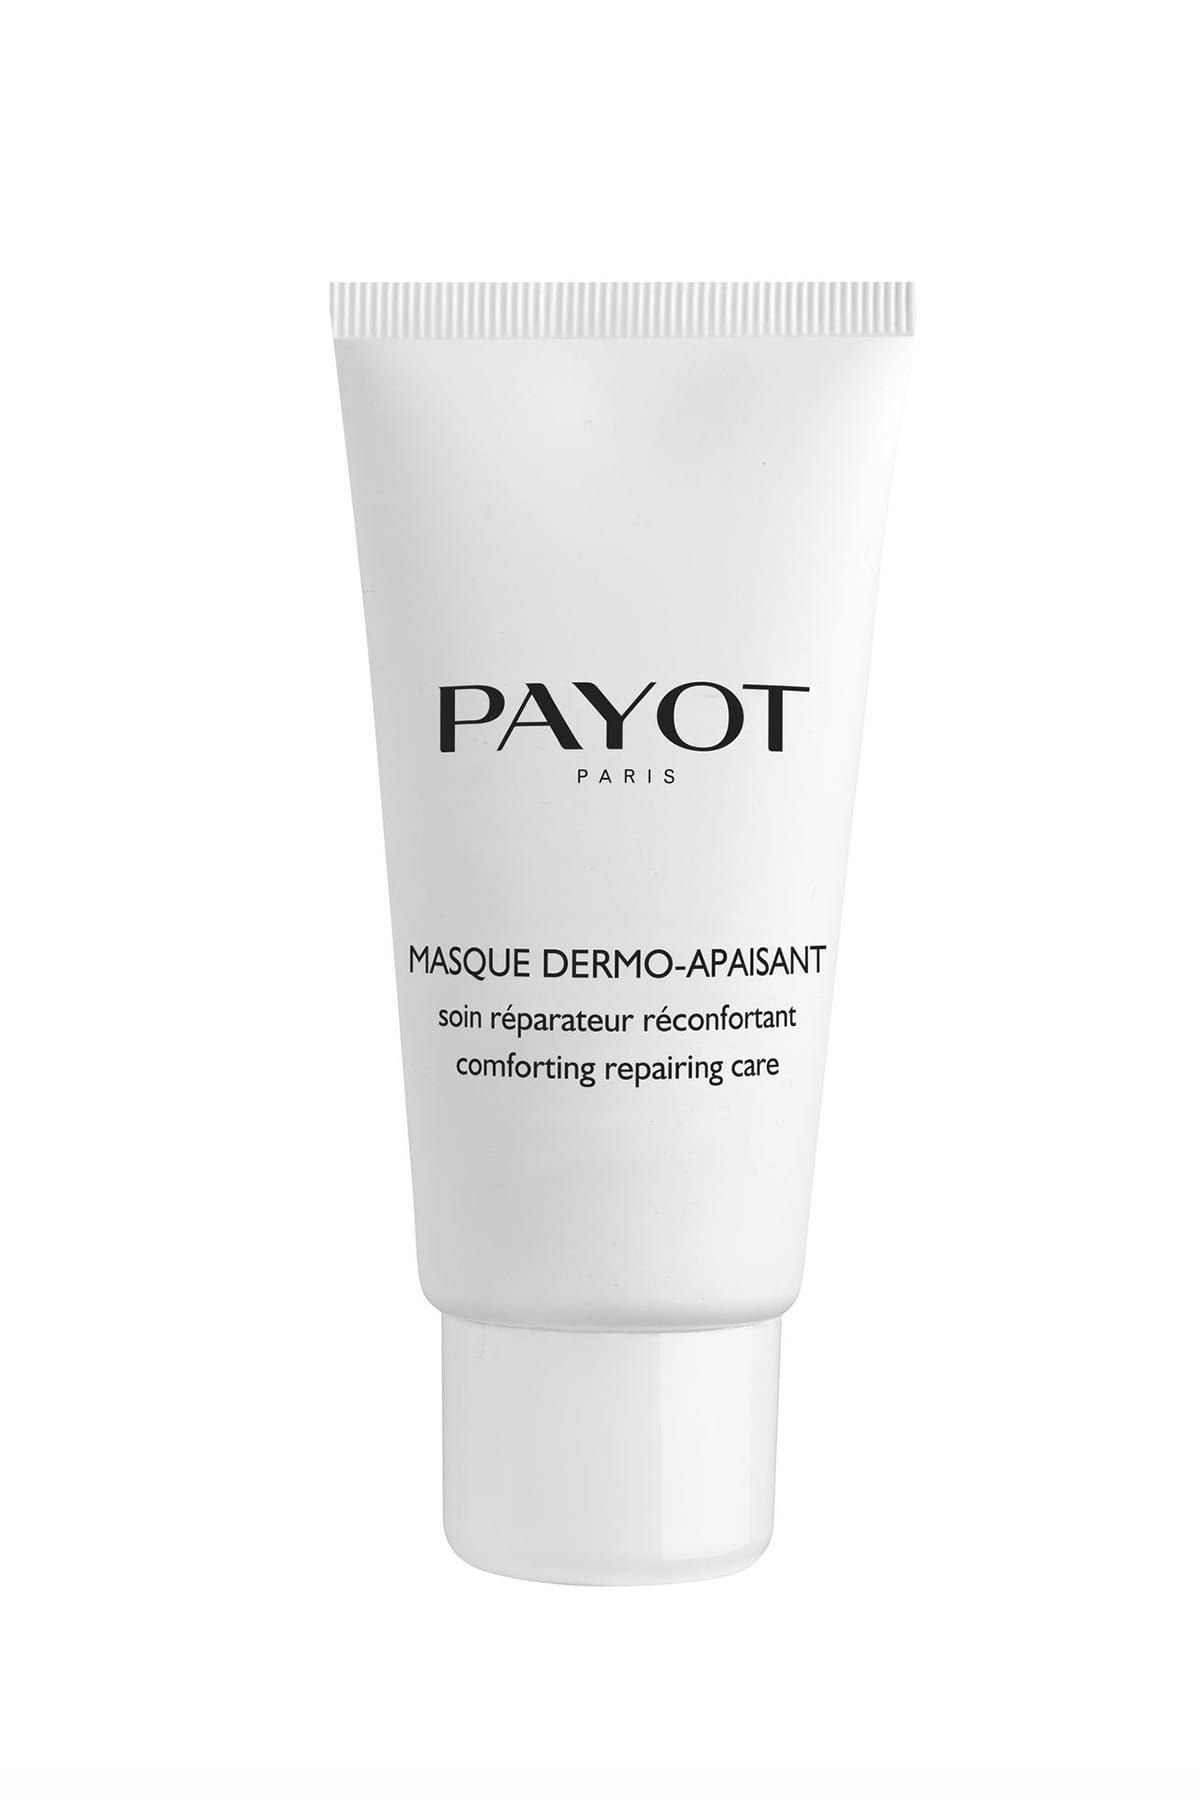 Payot Maske - Masque Dermo-Apaisant 50 ml 3390150543647